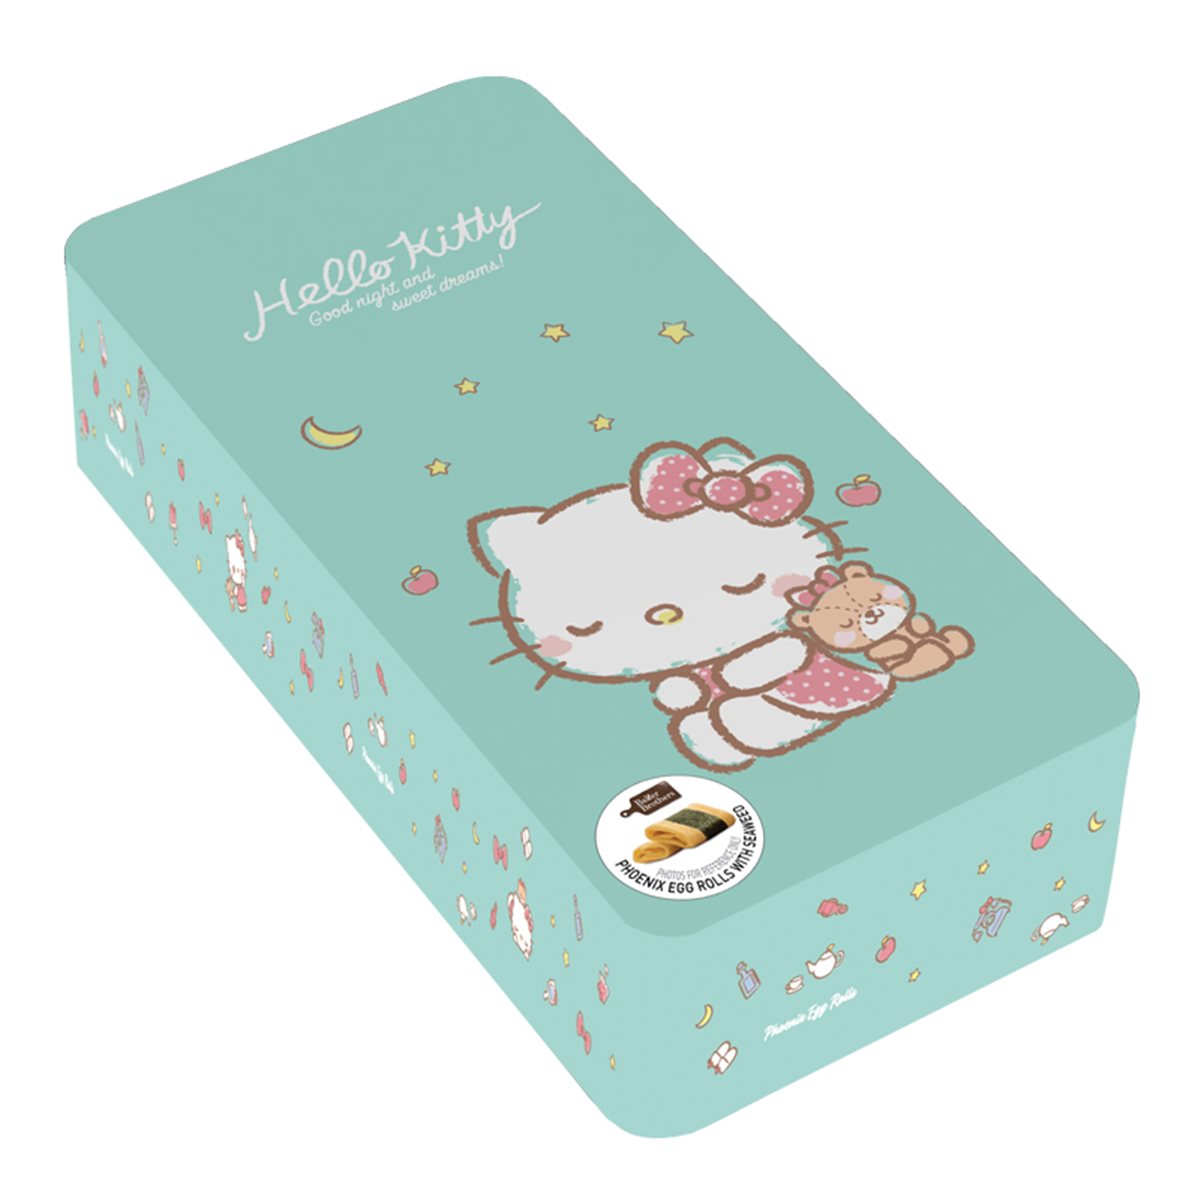 Hello Kitty粉絲衝啊！連鎖超市獨家推出「凱蒂貓餅乾」 超美包裝快收藏